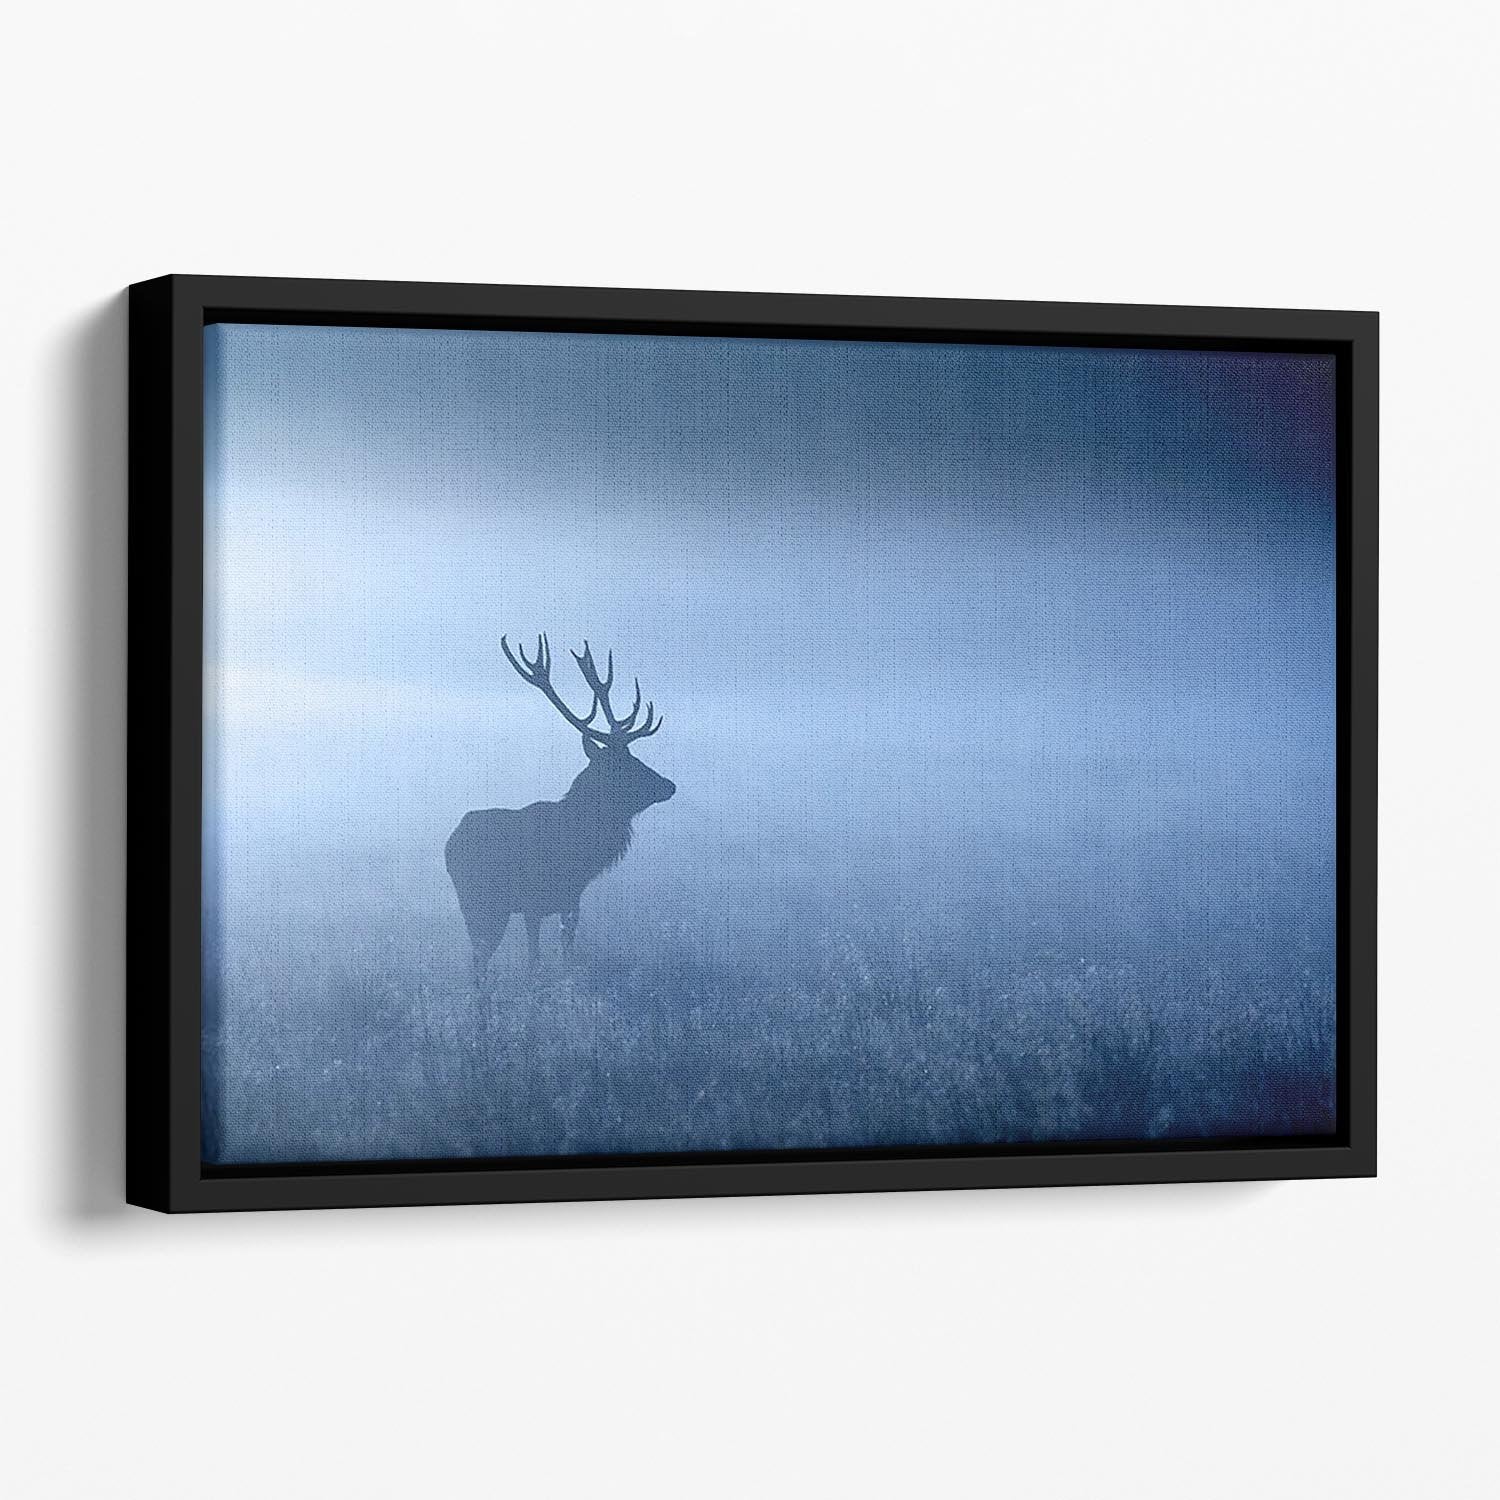 Red deer stag silhouette Floating Framed Canvas - Canvas Art Rocks - 1